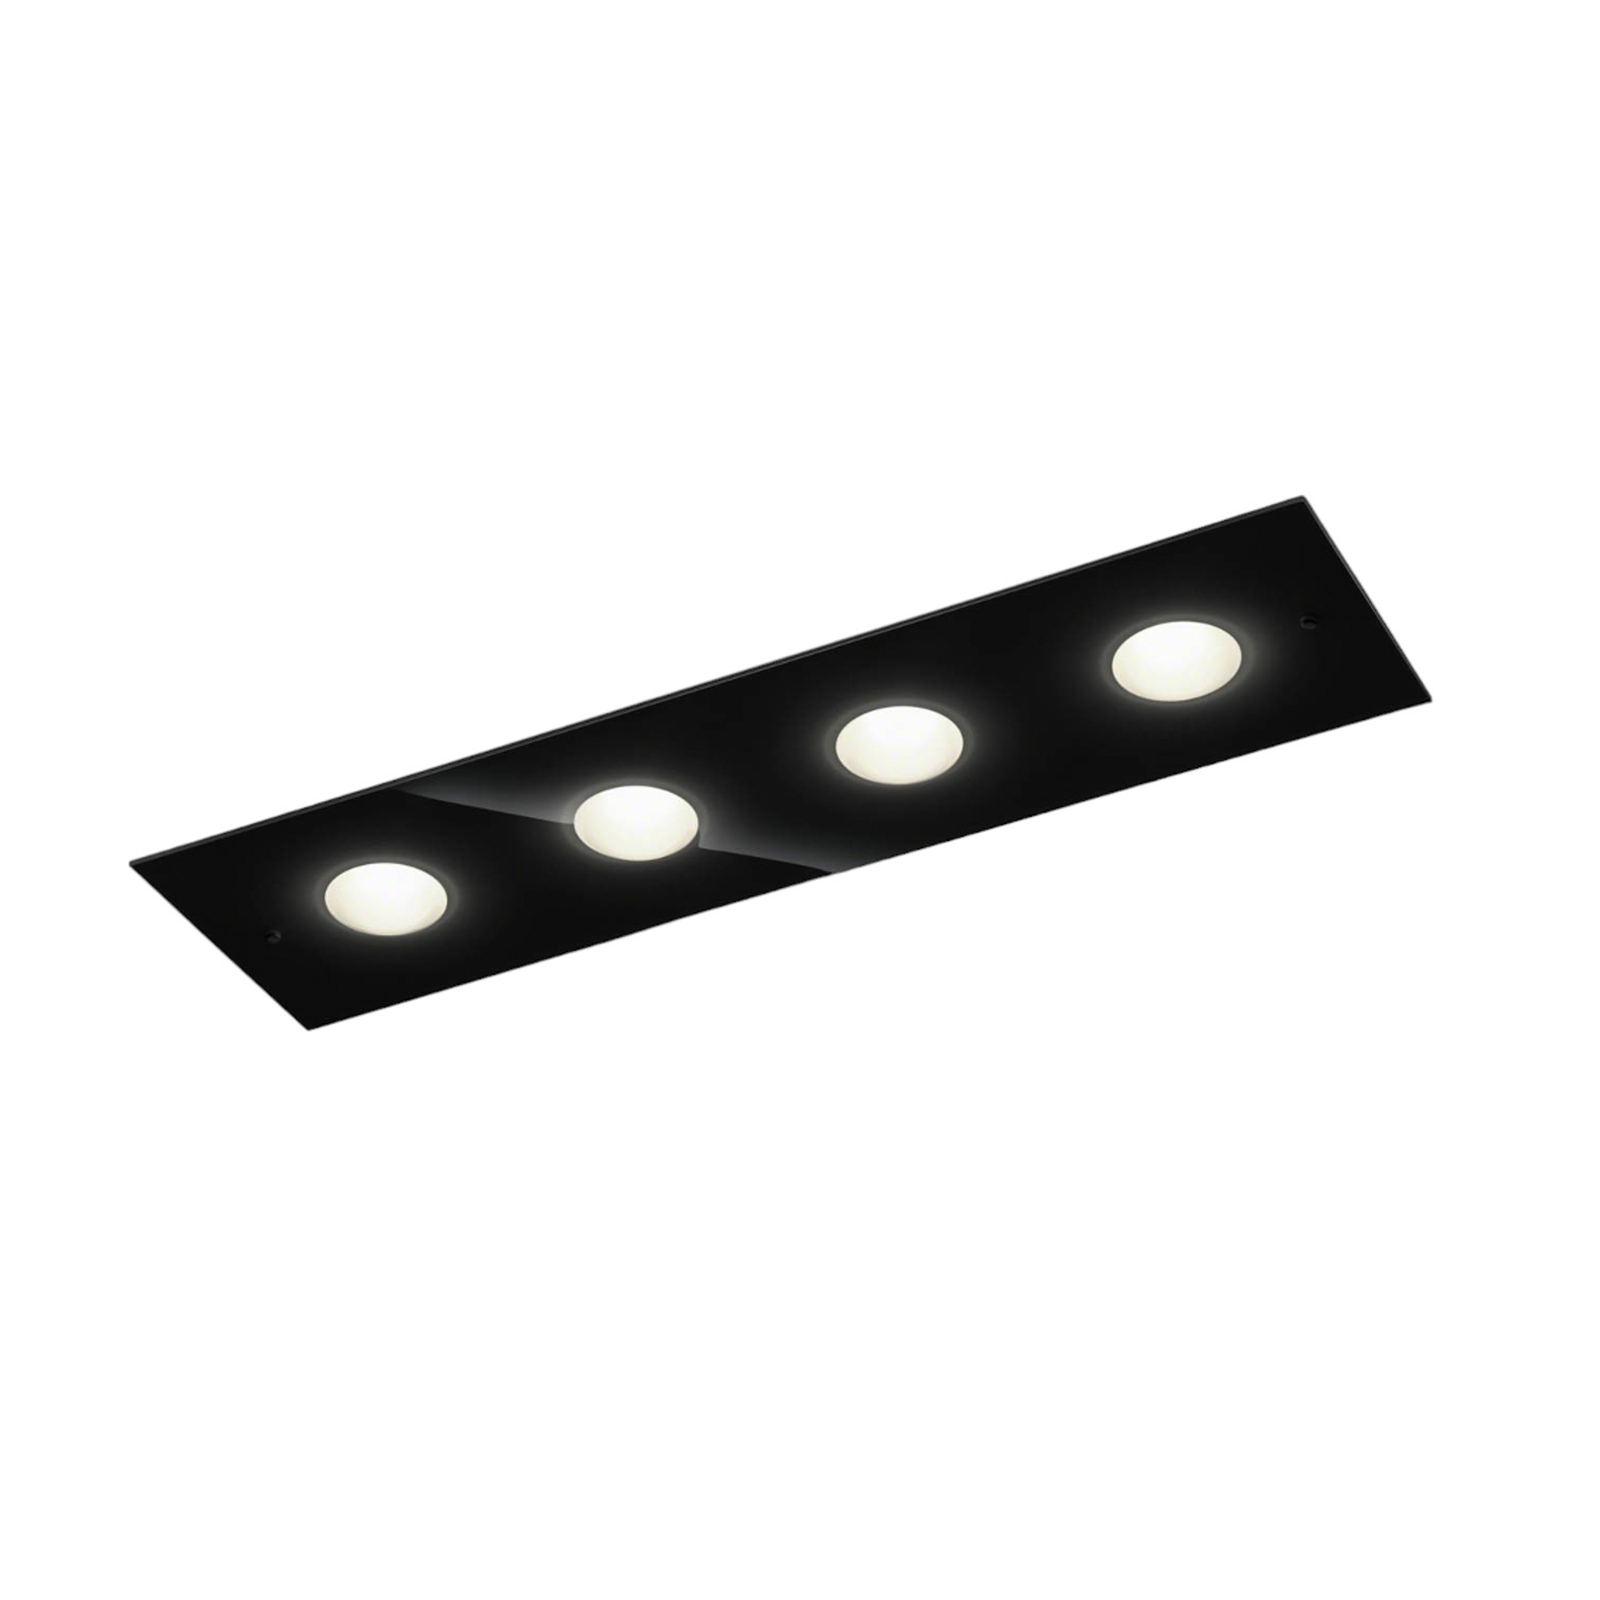 Helestra Nomi plafonnier LED 75x21 cm dim noir